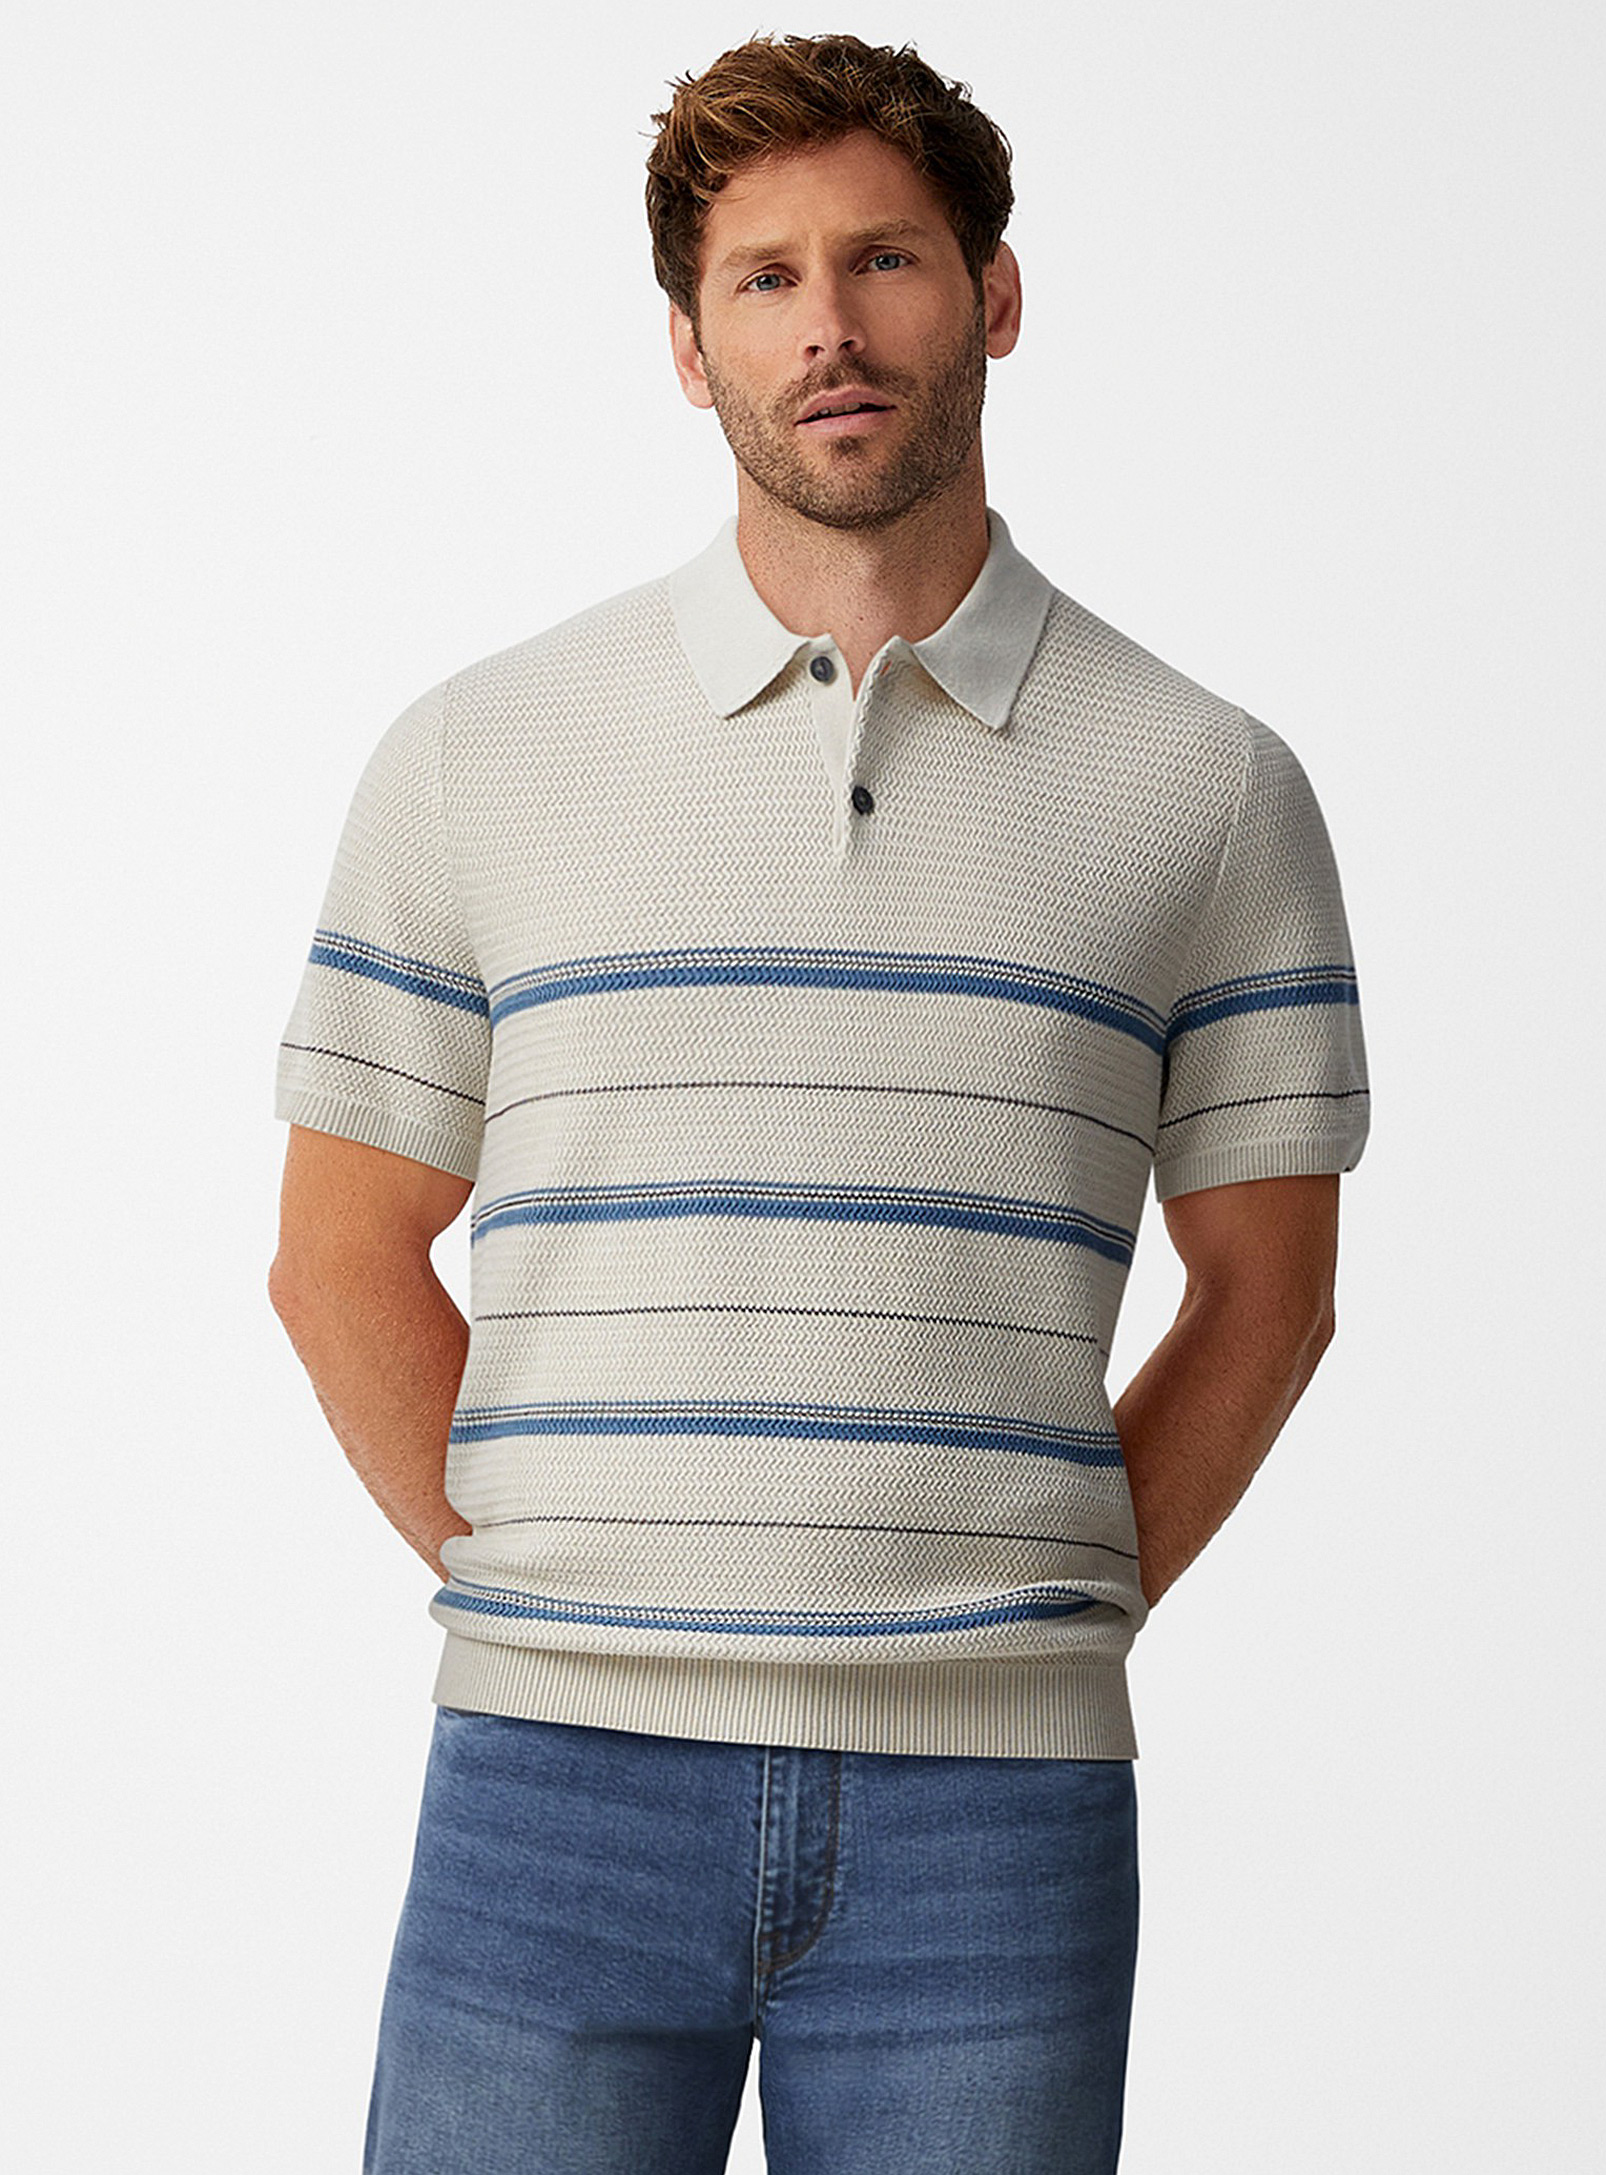 Jack & Jones - Men's Zigzag knit striped Polo Shirt